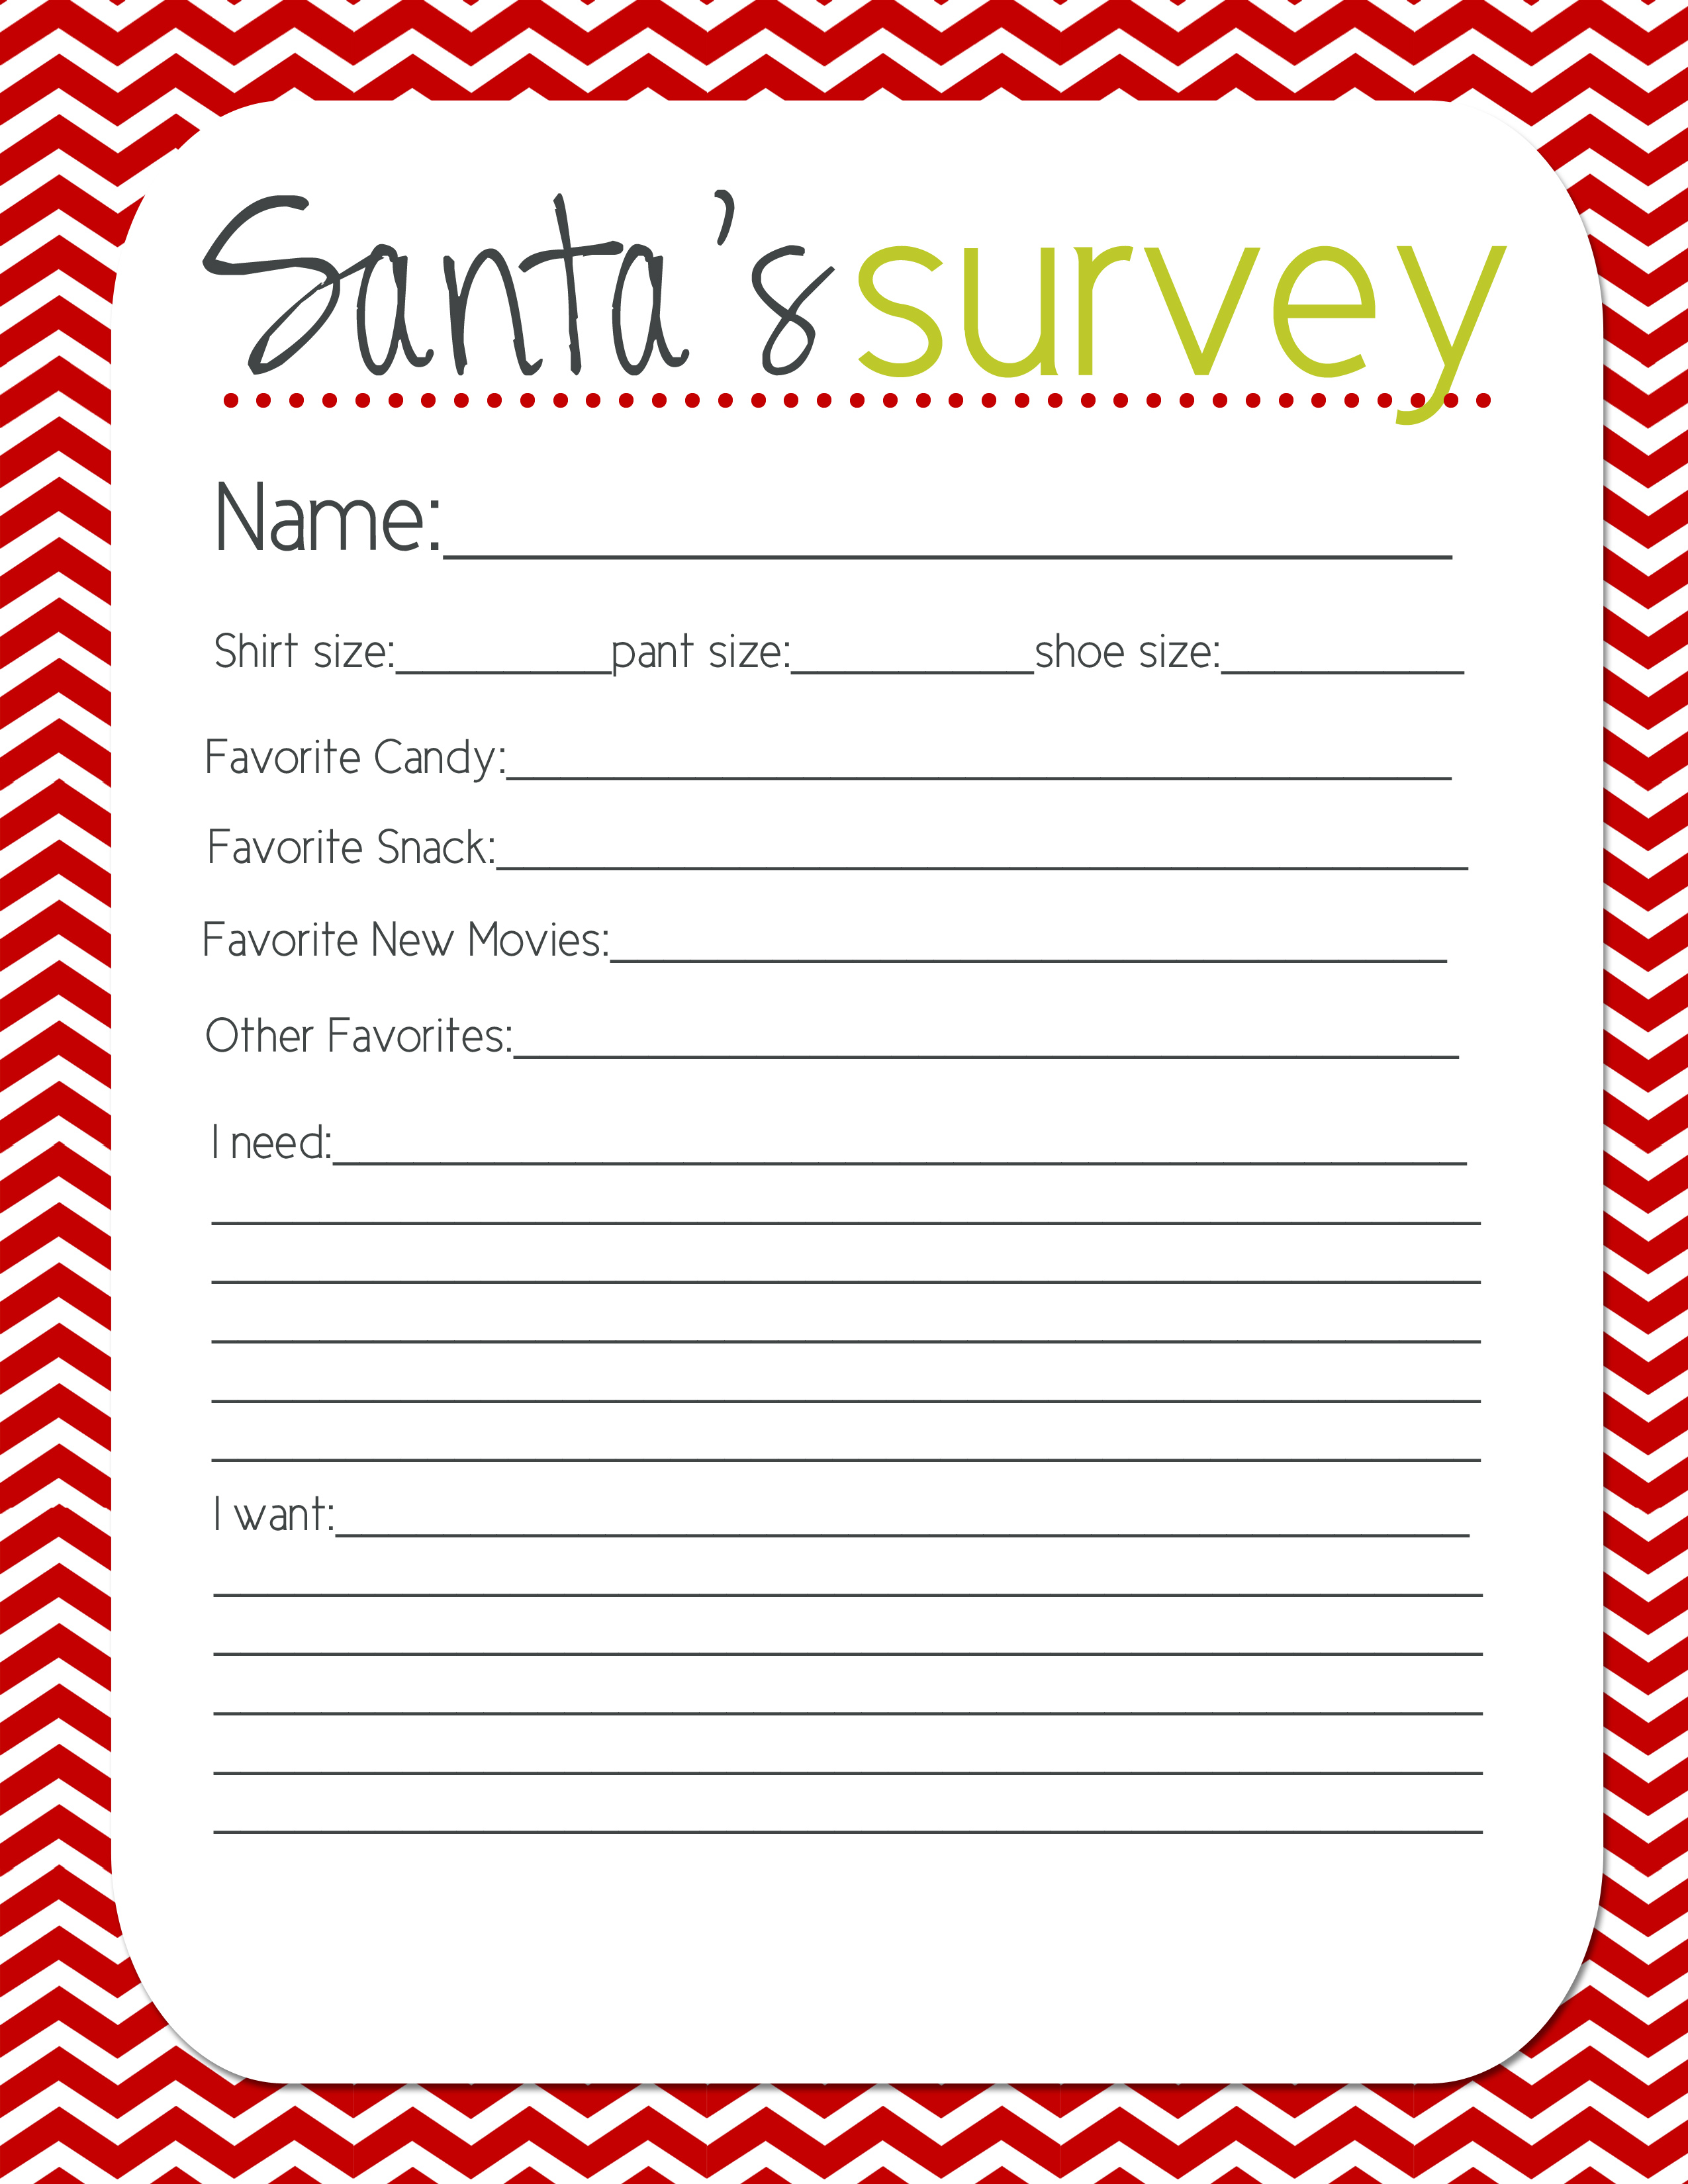 Santa's Survey Free Printable